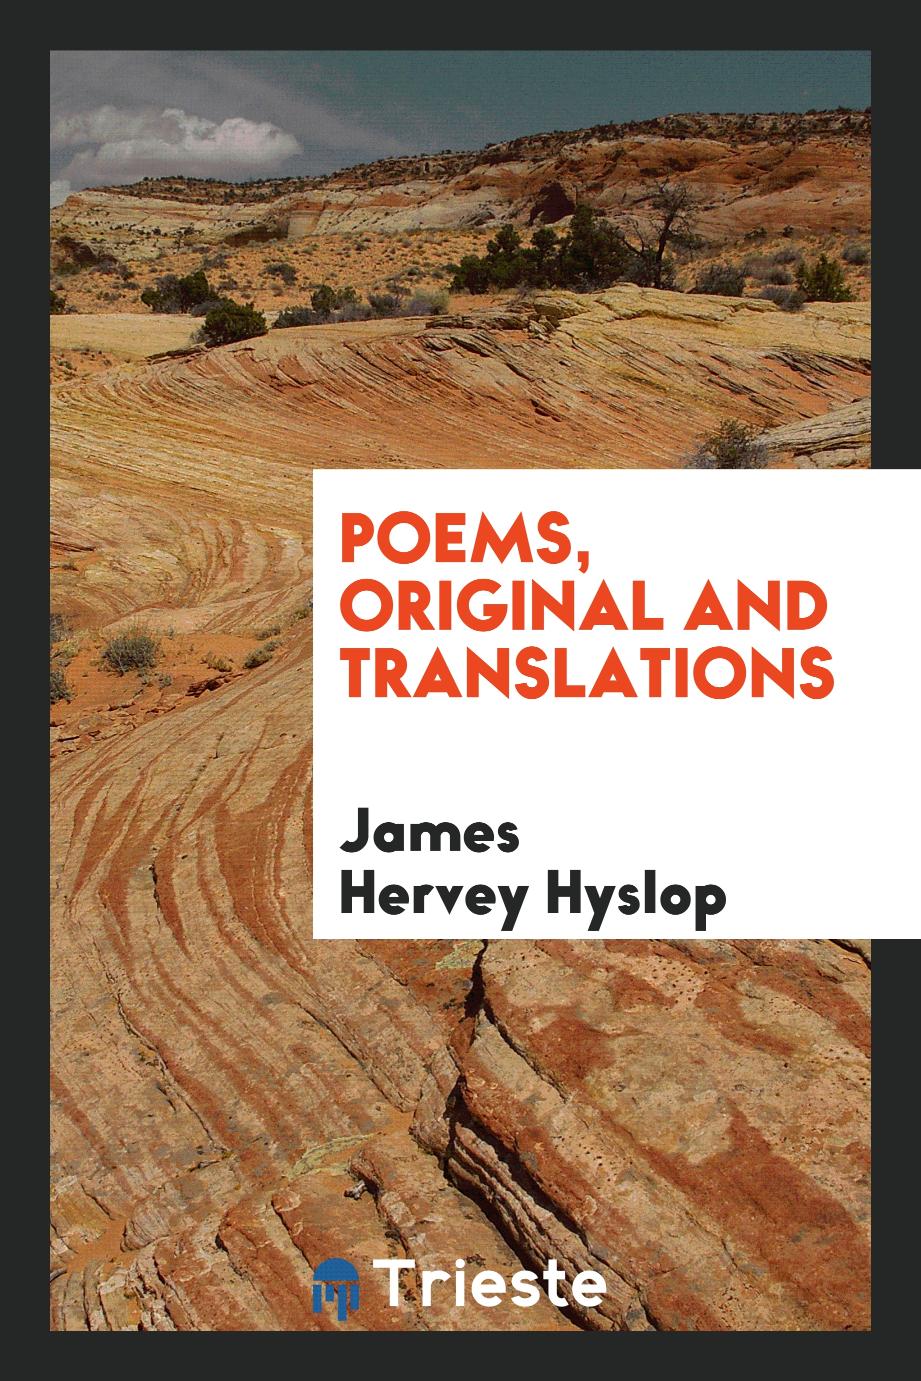 Poems, original and translations